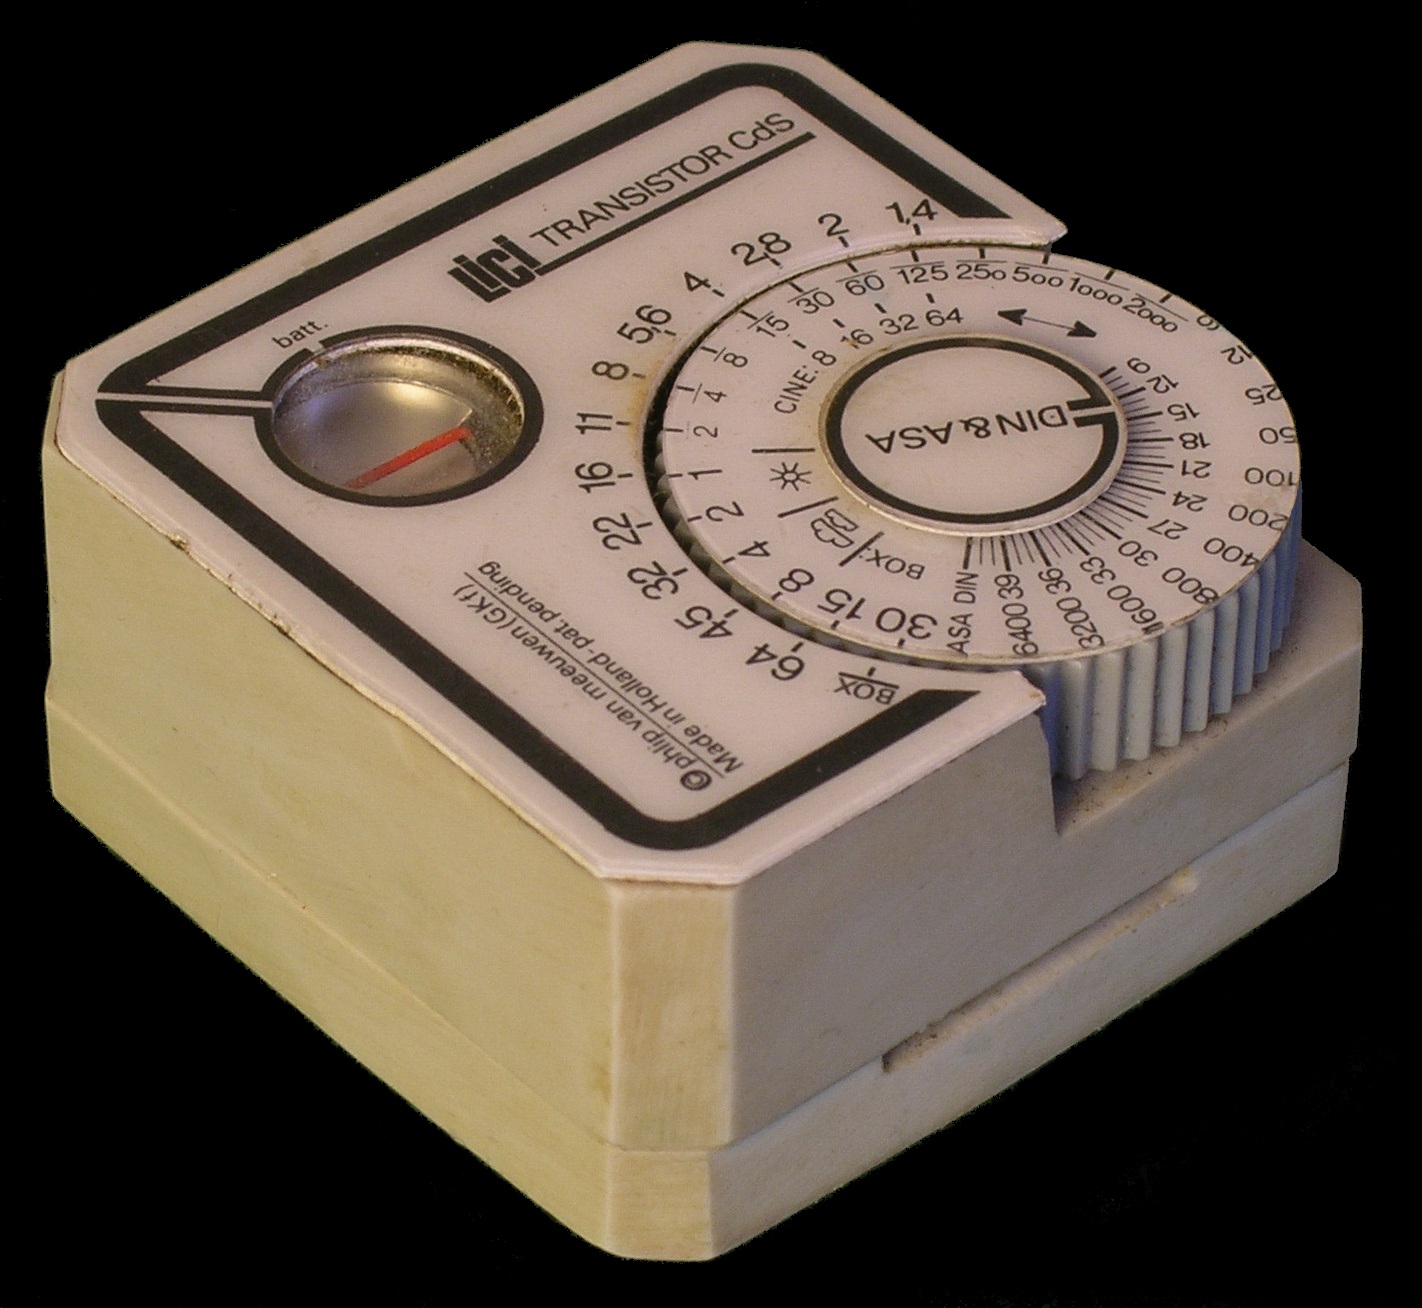 ALRO LiCi Transistor CdS (AC-1.41) Pocket Photographic